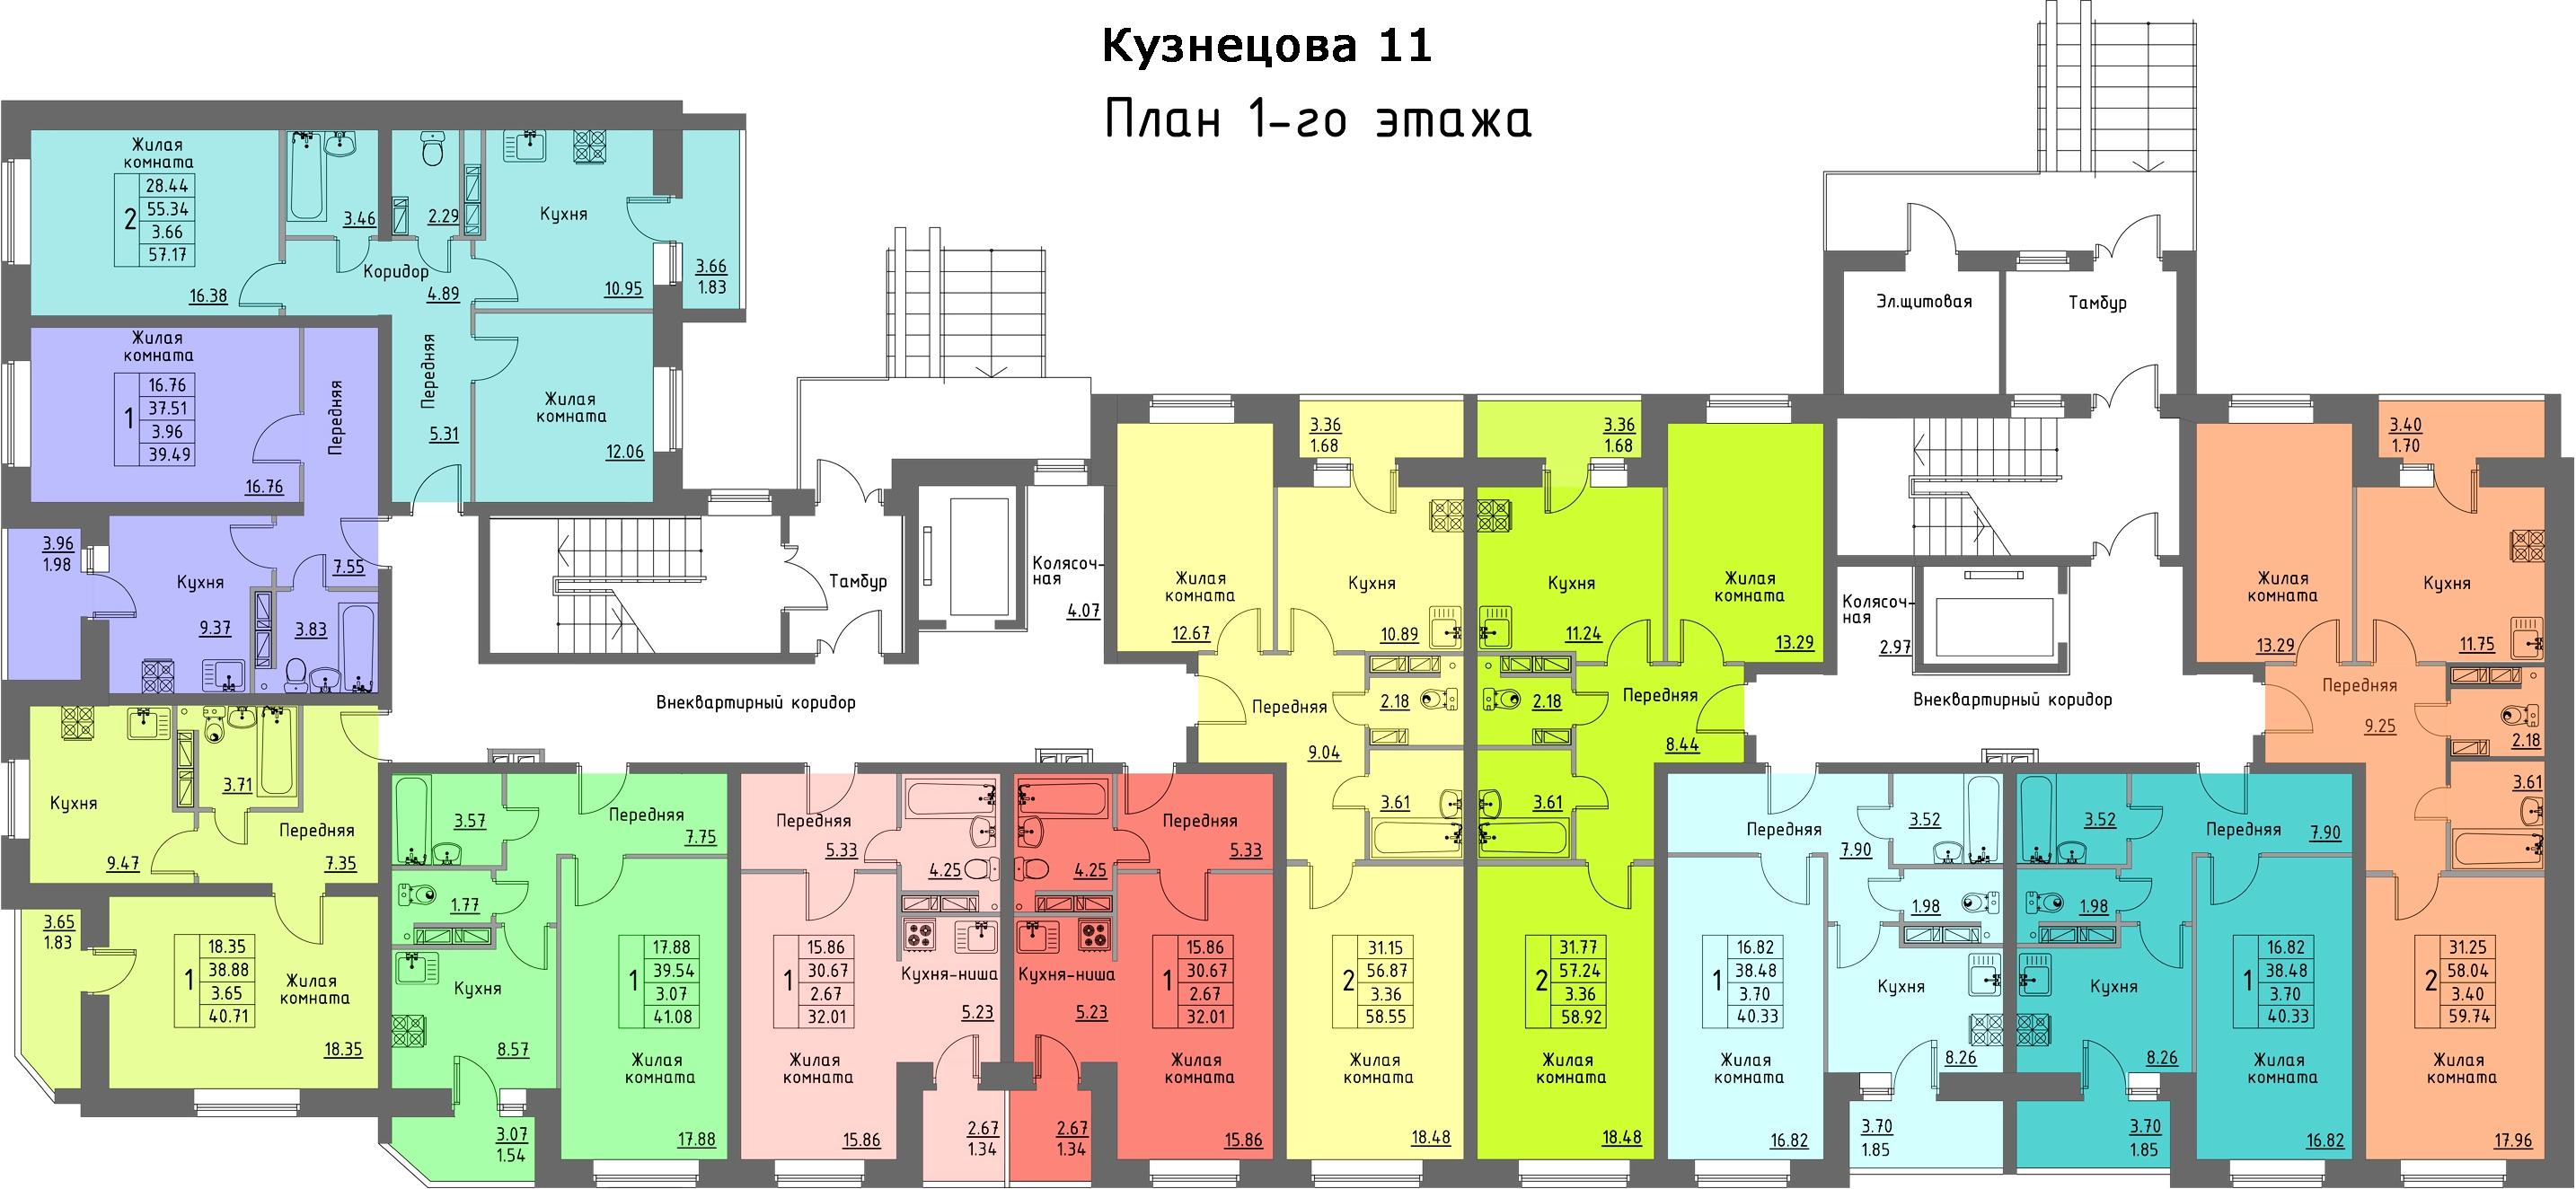 План первого этажа Кузнецова 11